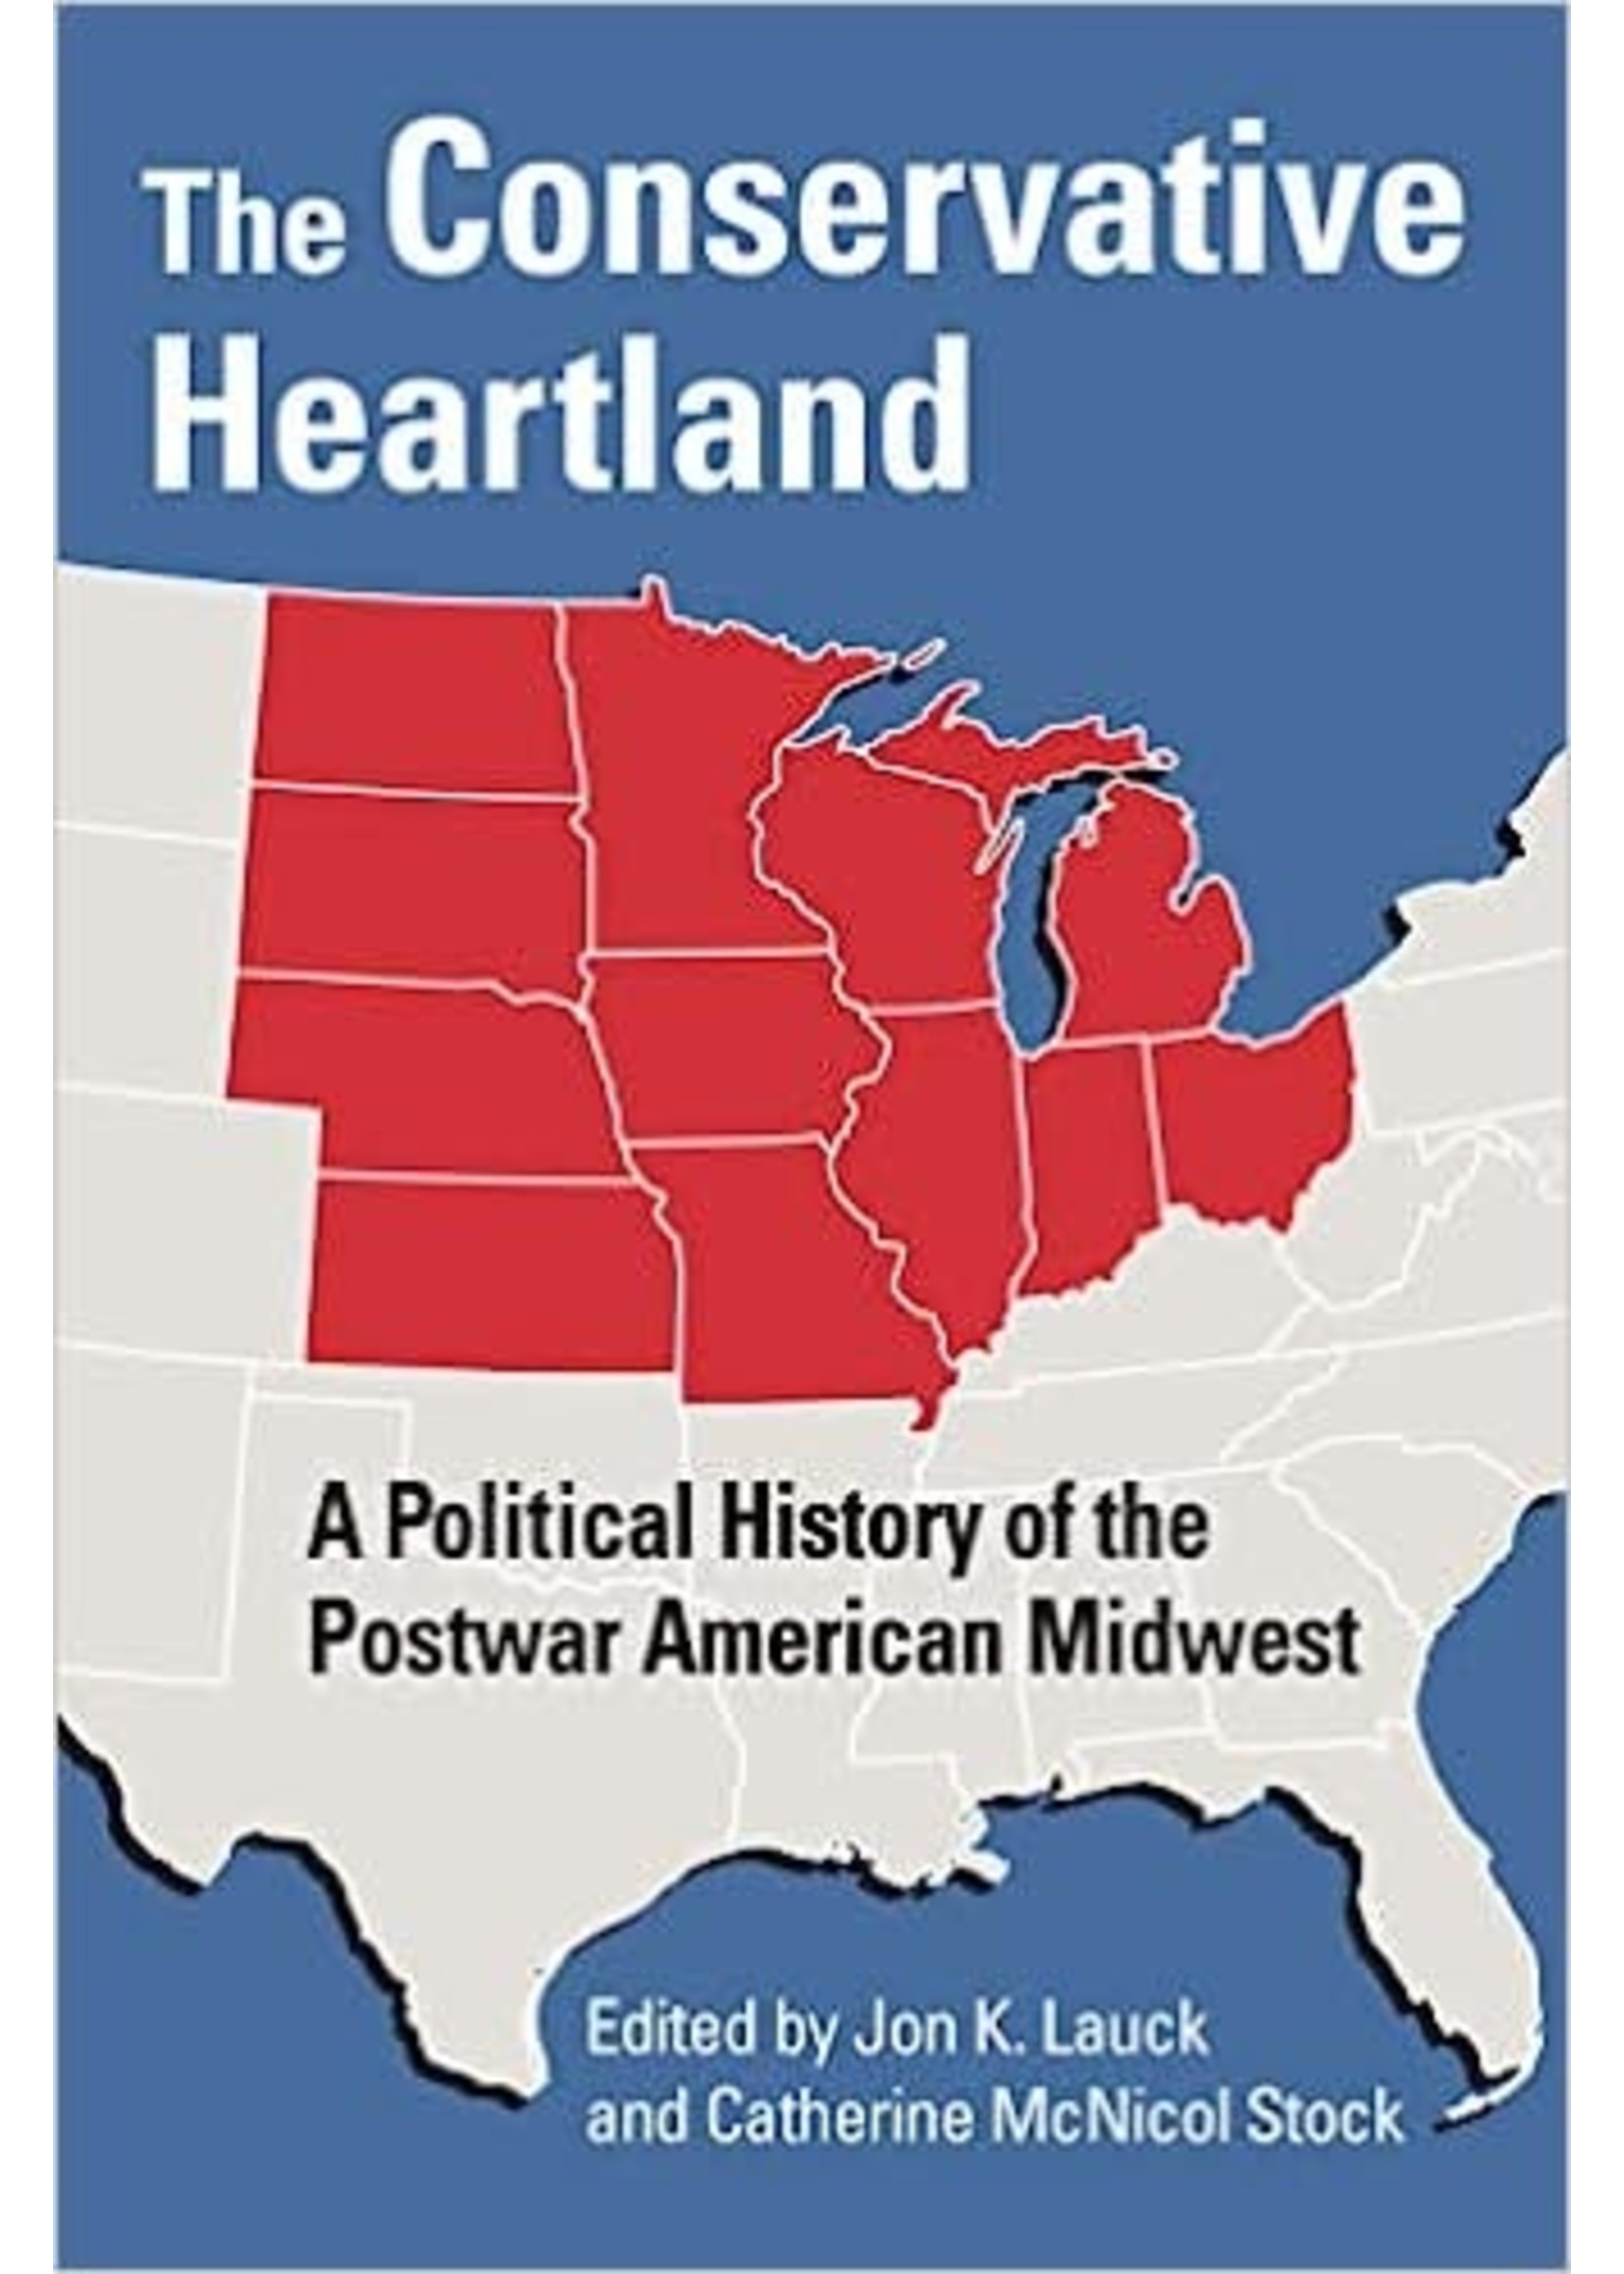 The Conservative Heartland by John K. Lauck